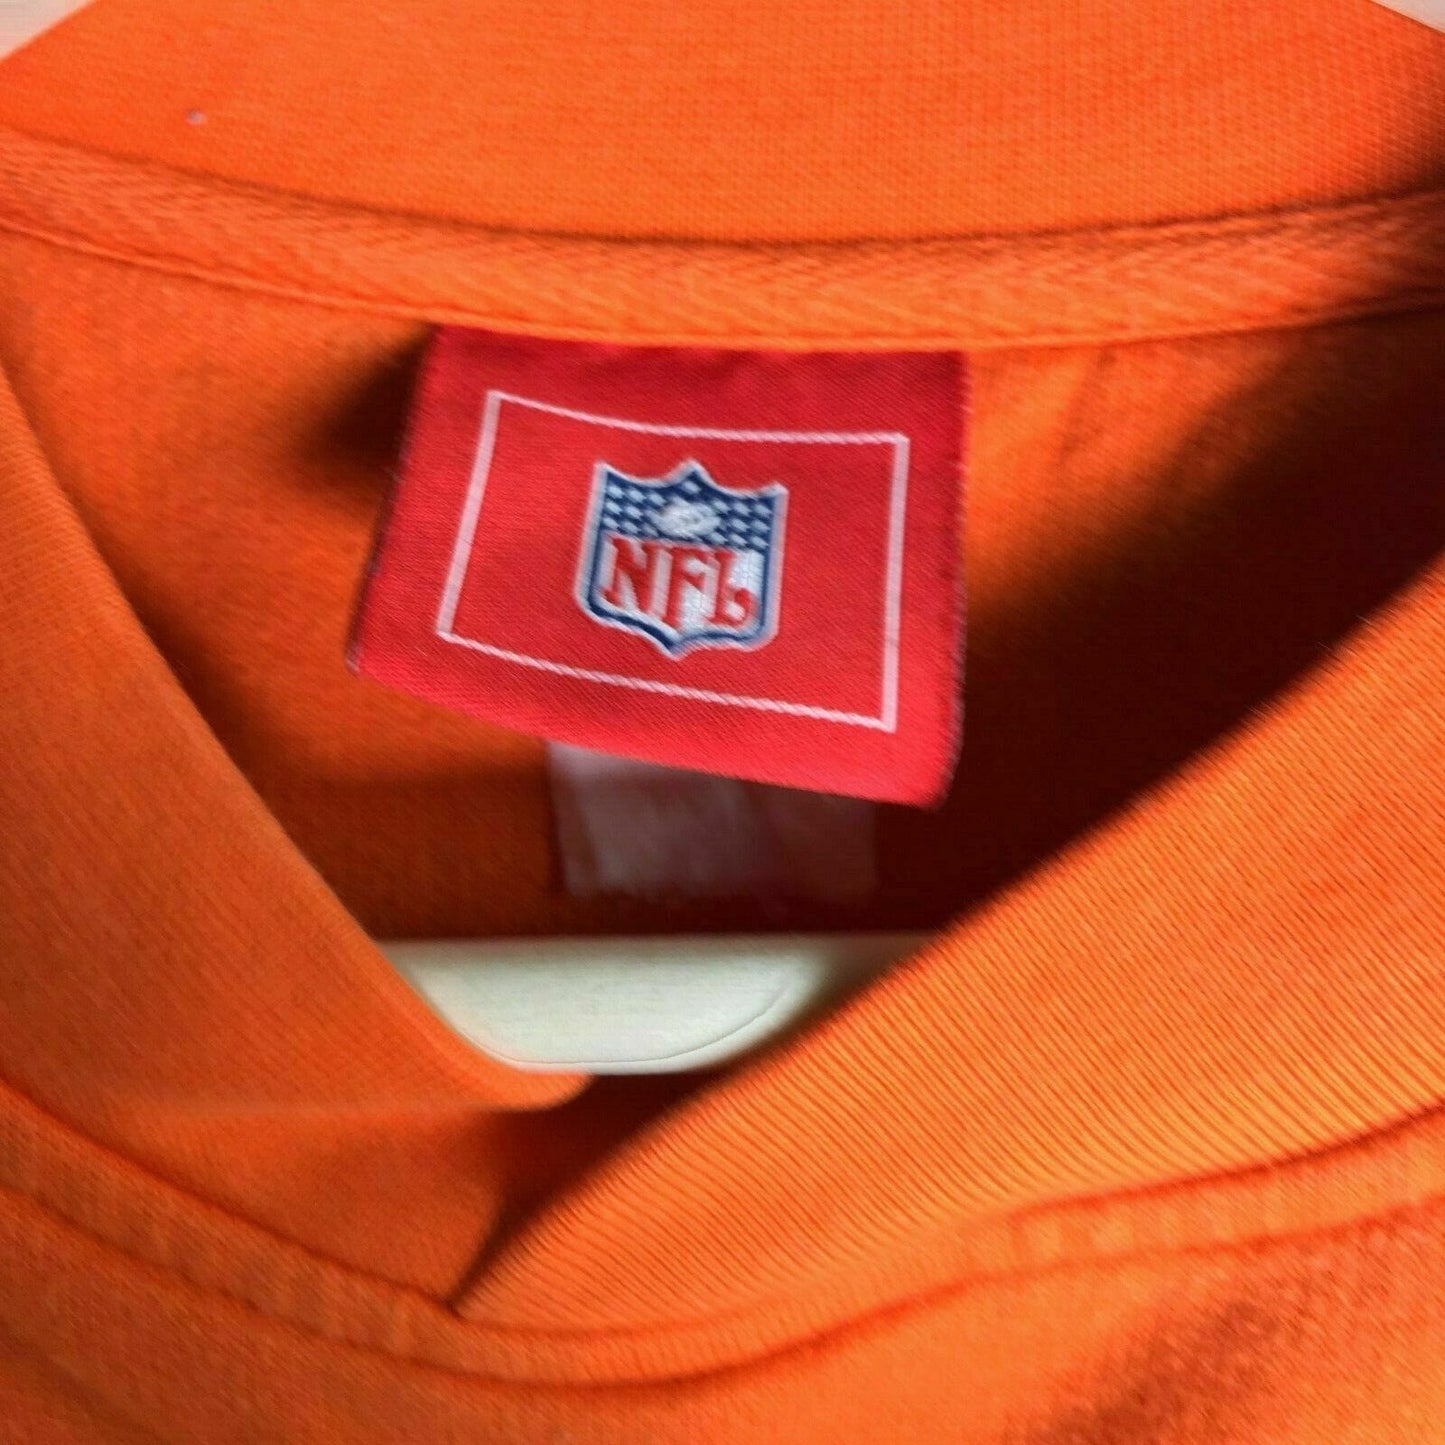 Denver Broncos Mens Size XL Orange NFL Crew Neck Sweatshirt Football Embroidered AFC West